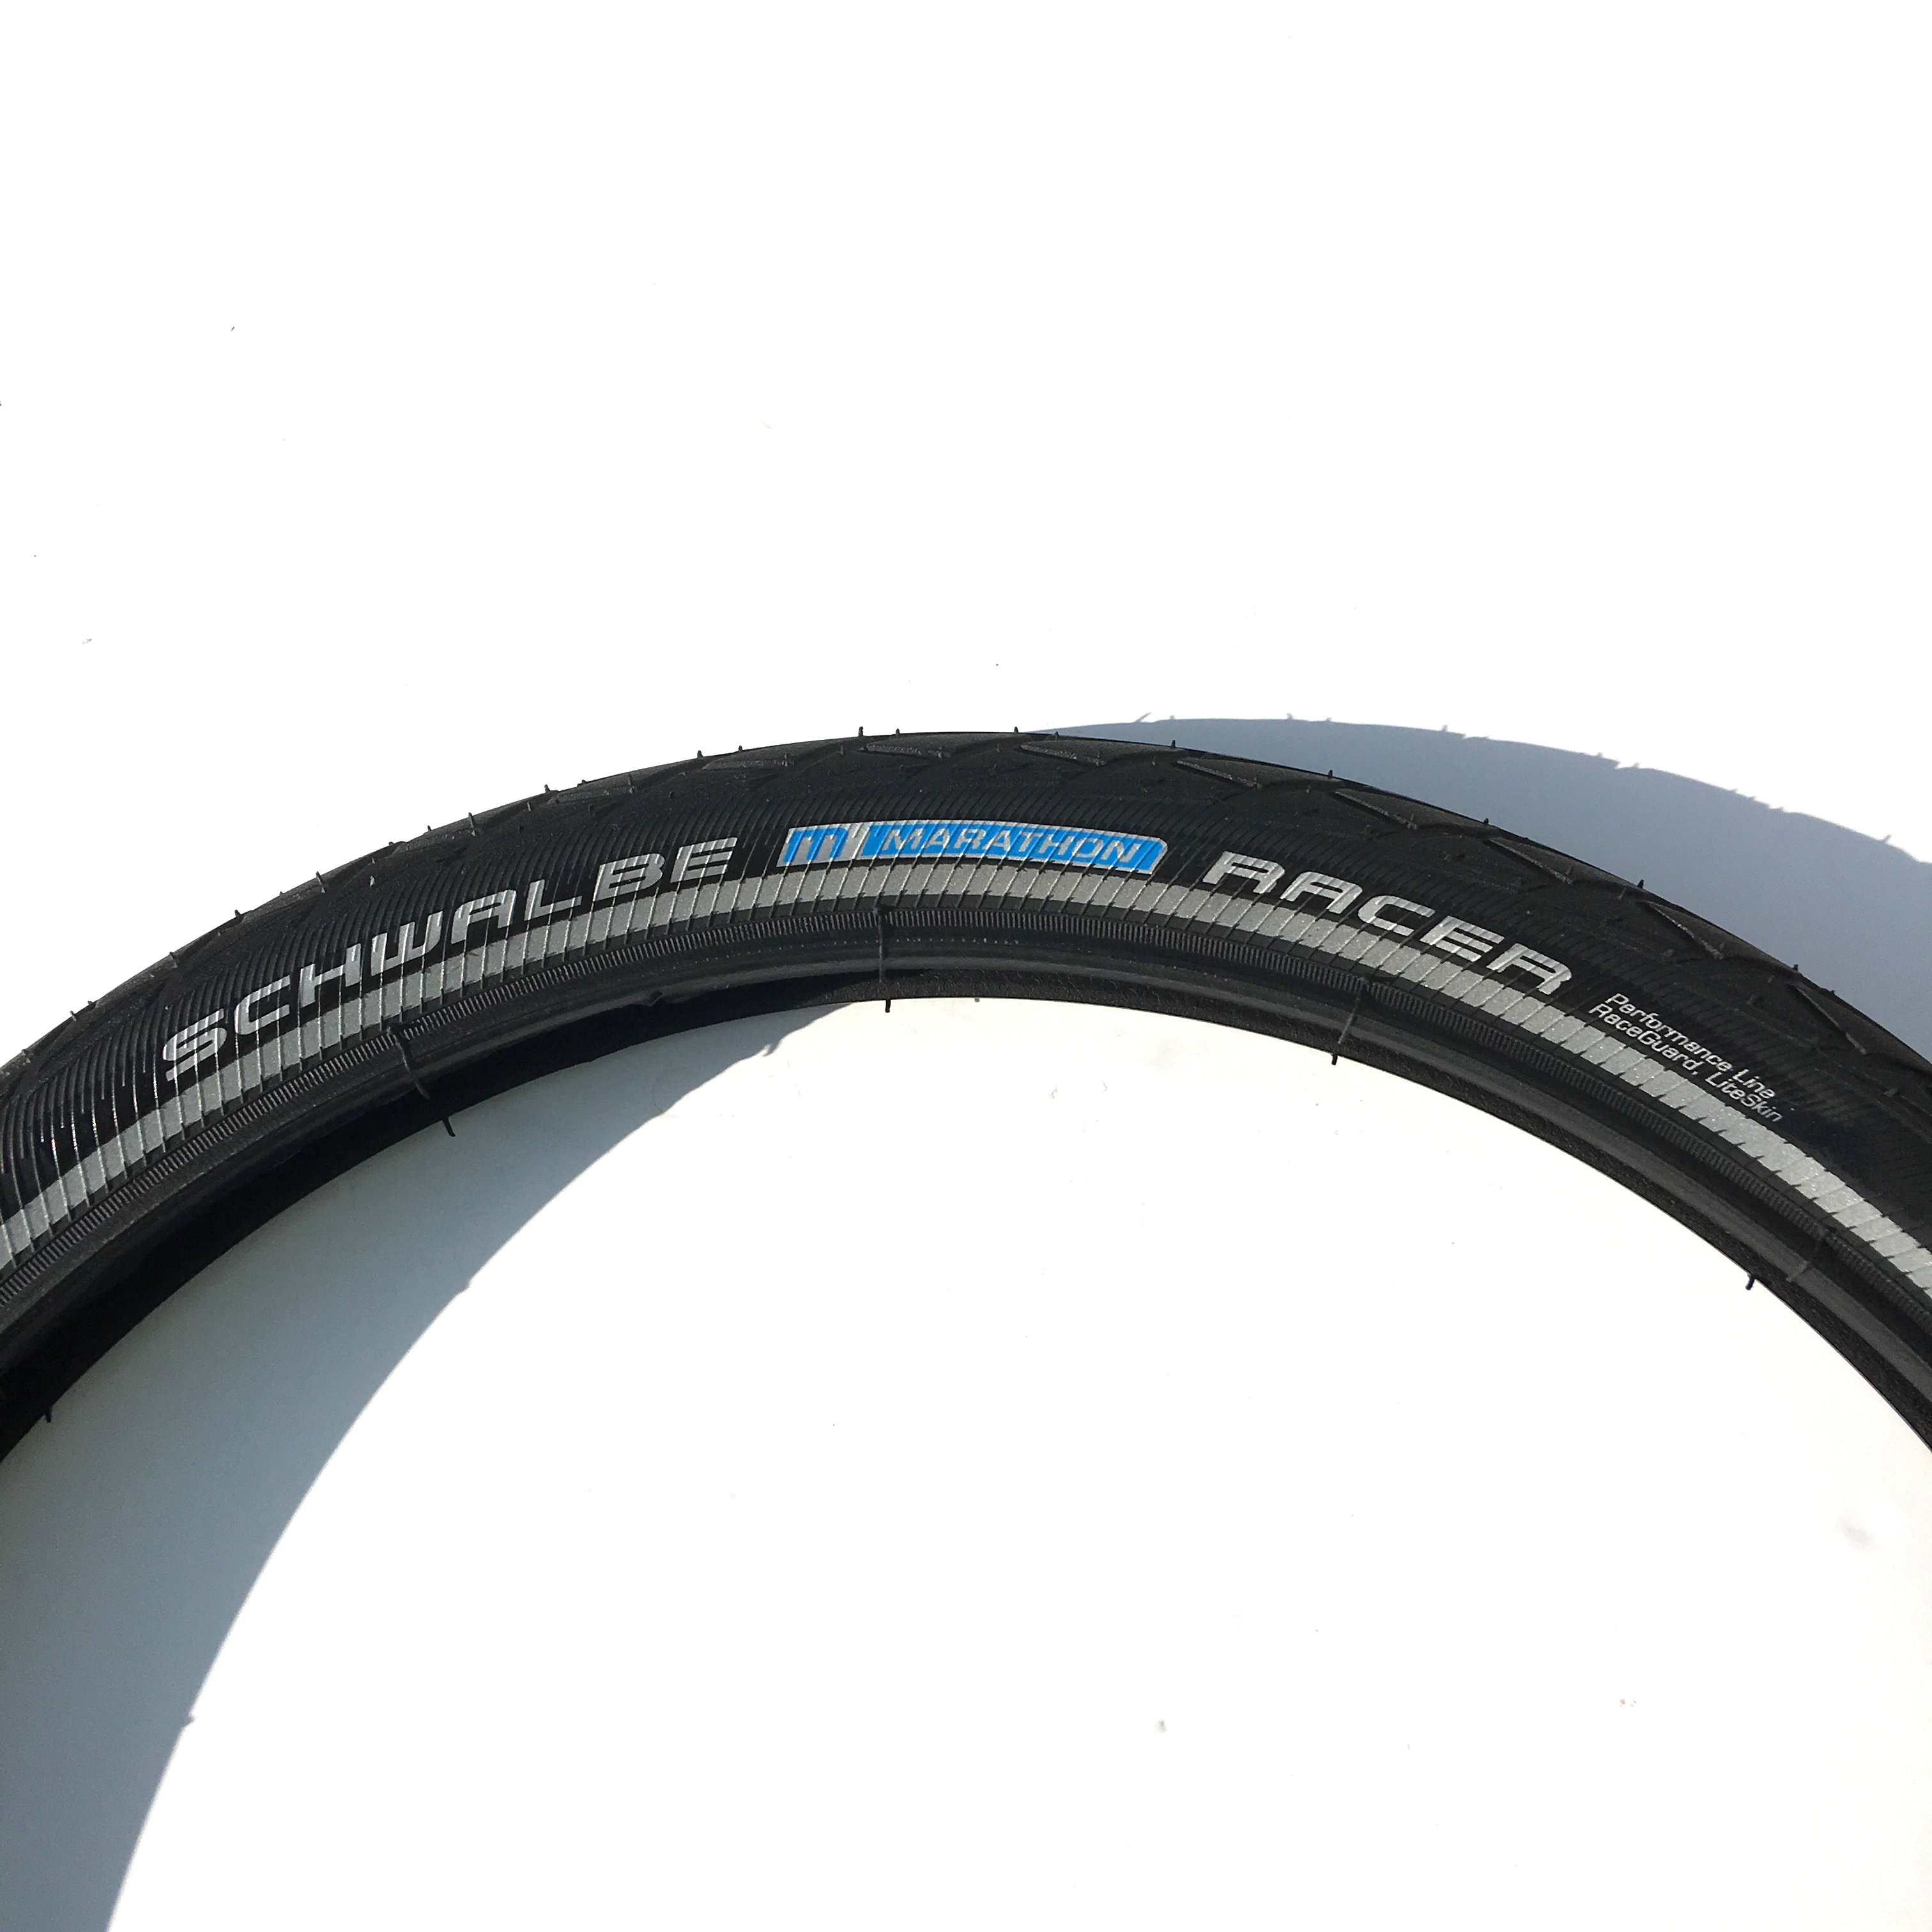 schwalbe 20 inch tyres